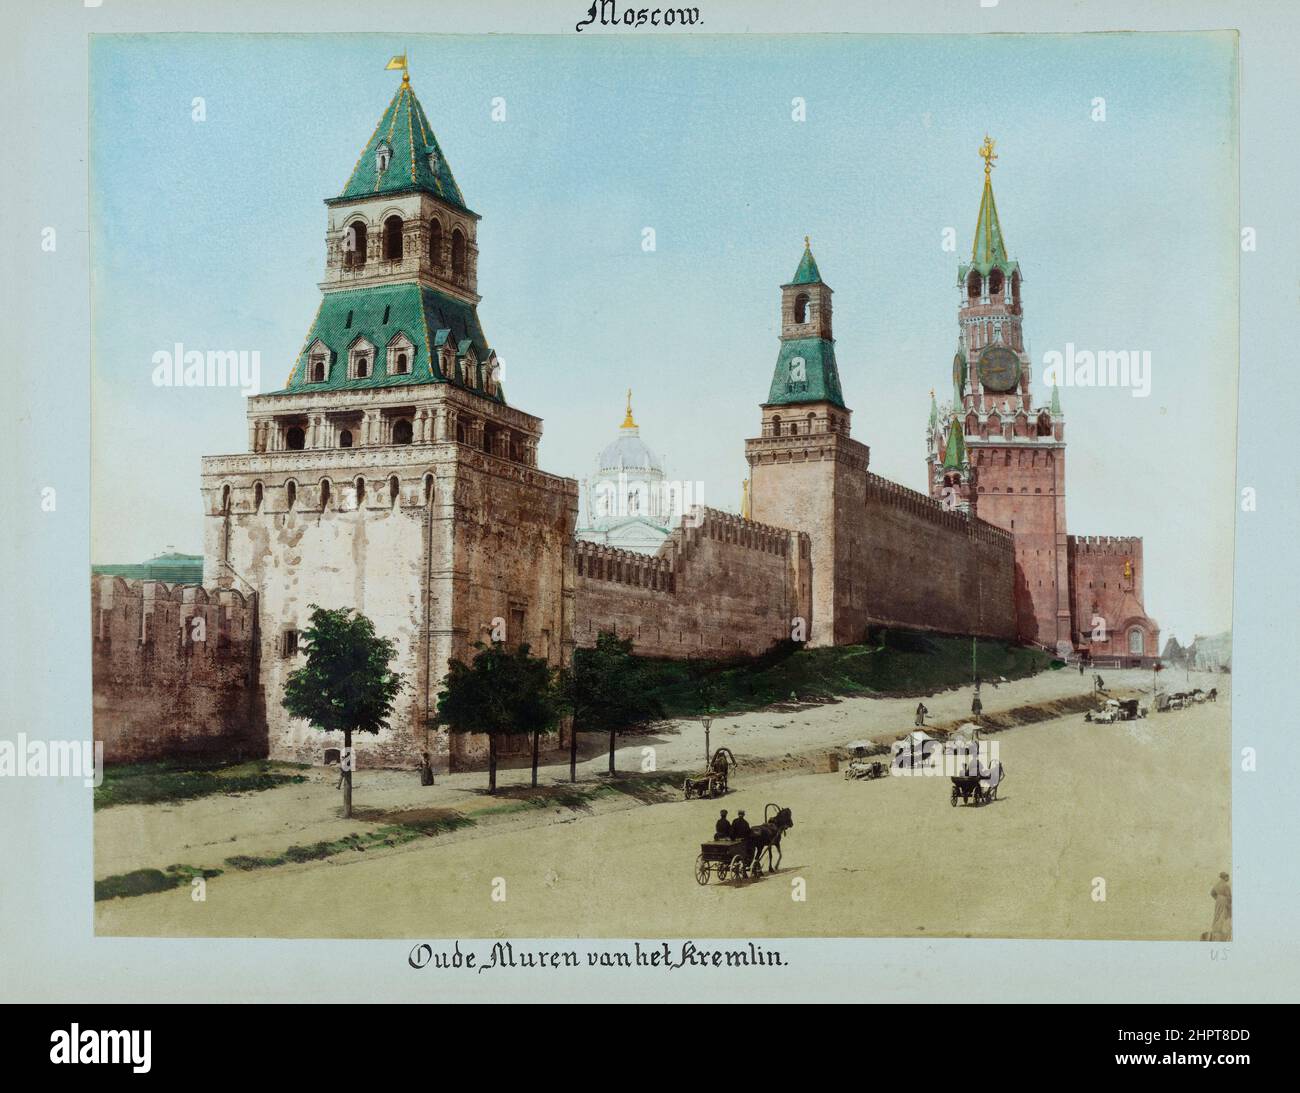 Foto del 19th secolo di Konstantino-Eleninskaya (a sinistra), le torri Nabatnaya e Spasskaya (a destra) del Cremlino di Mosca. Foto Stock